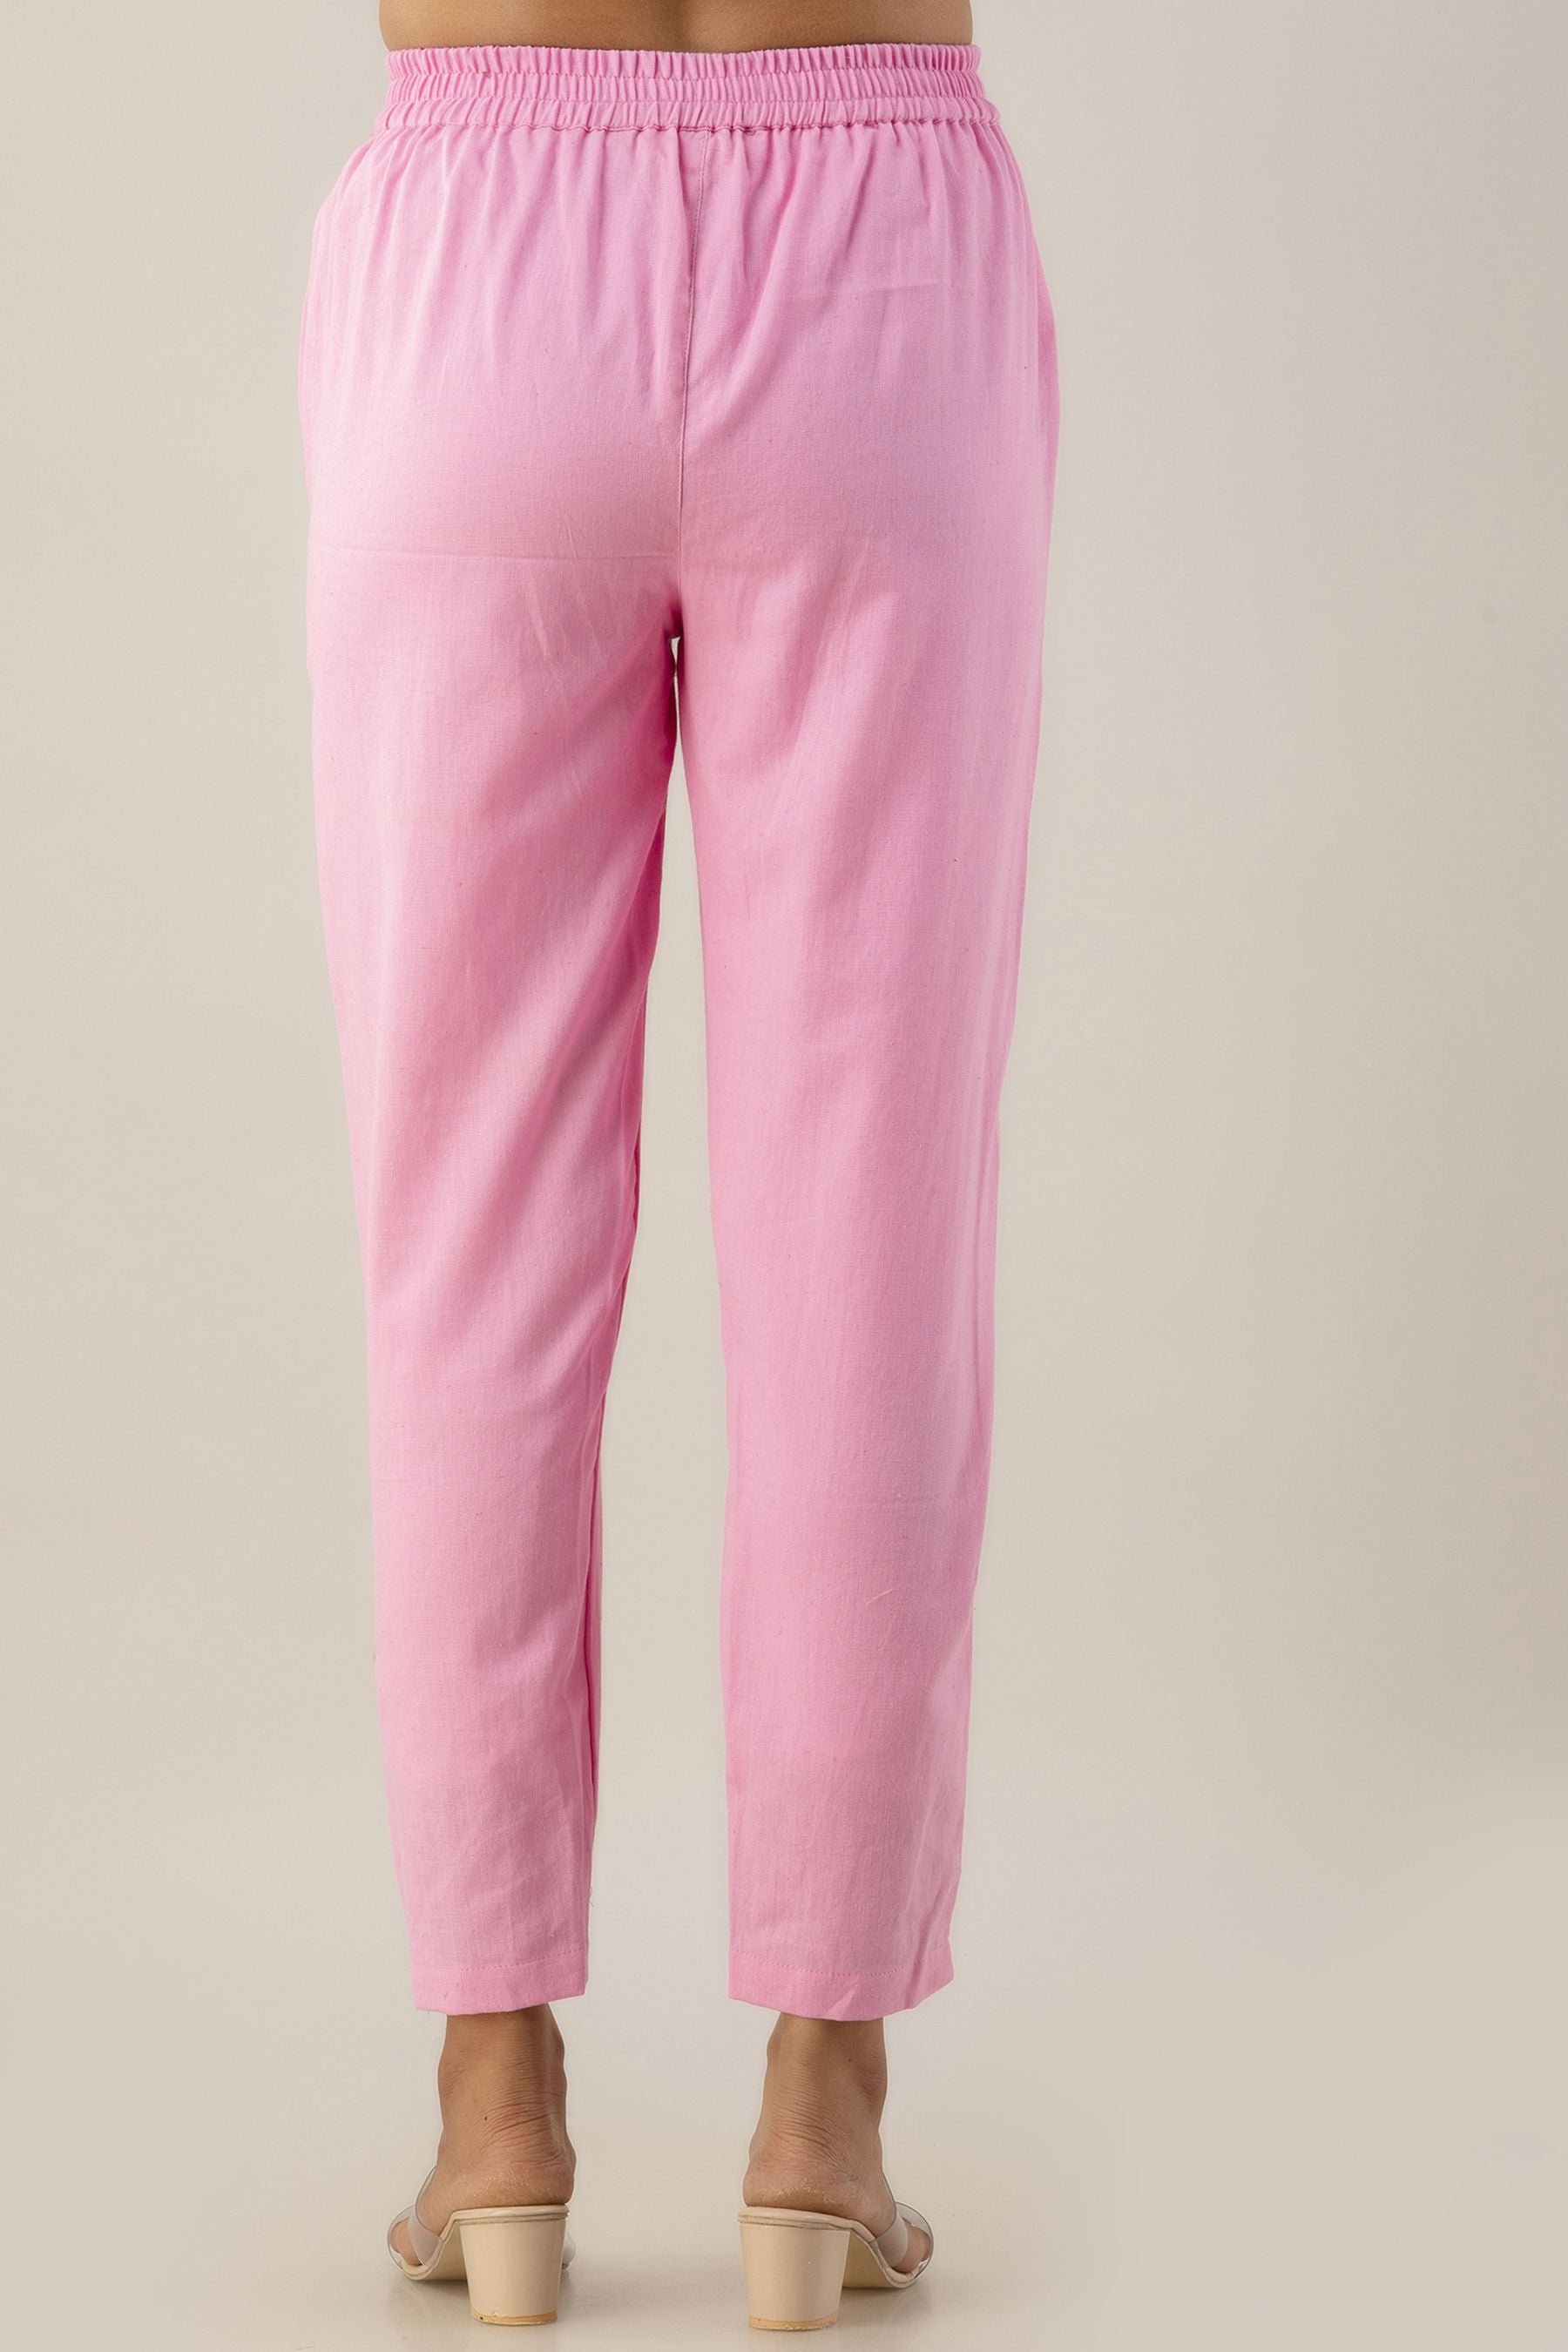 Formal Pants For Women